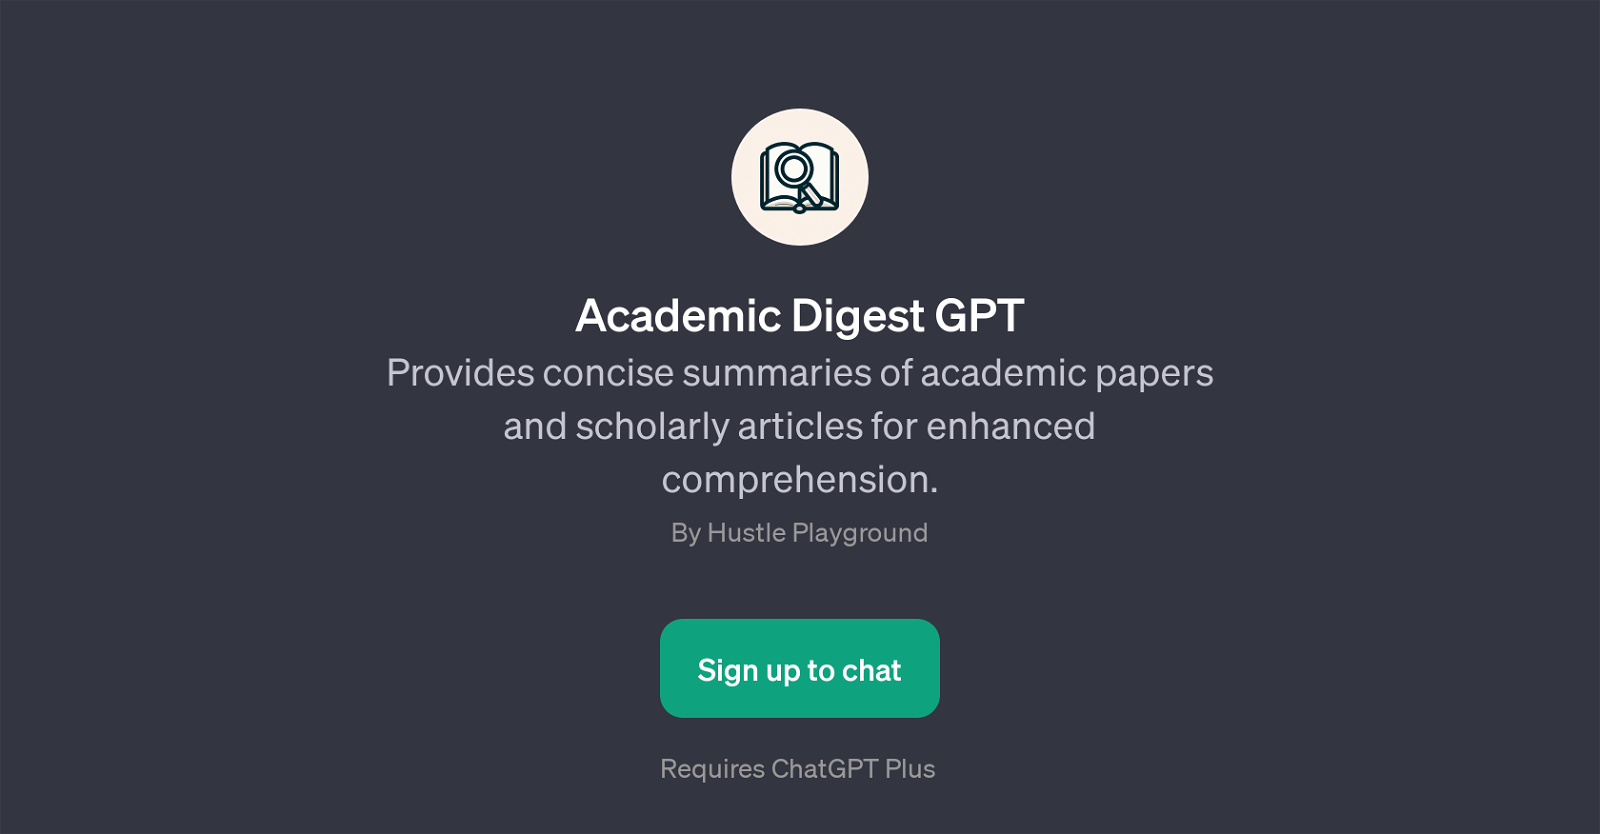 Academic Digest GPT website